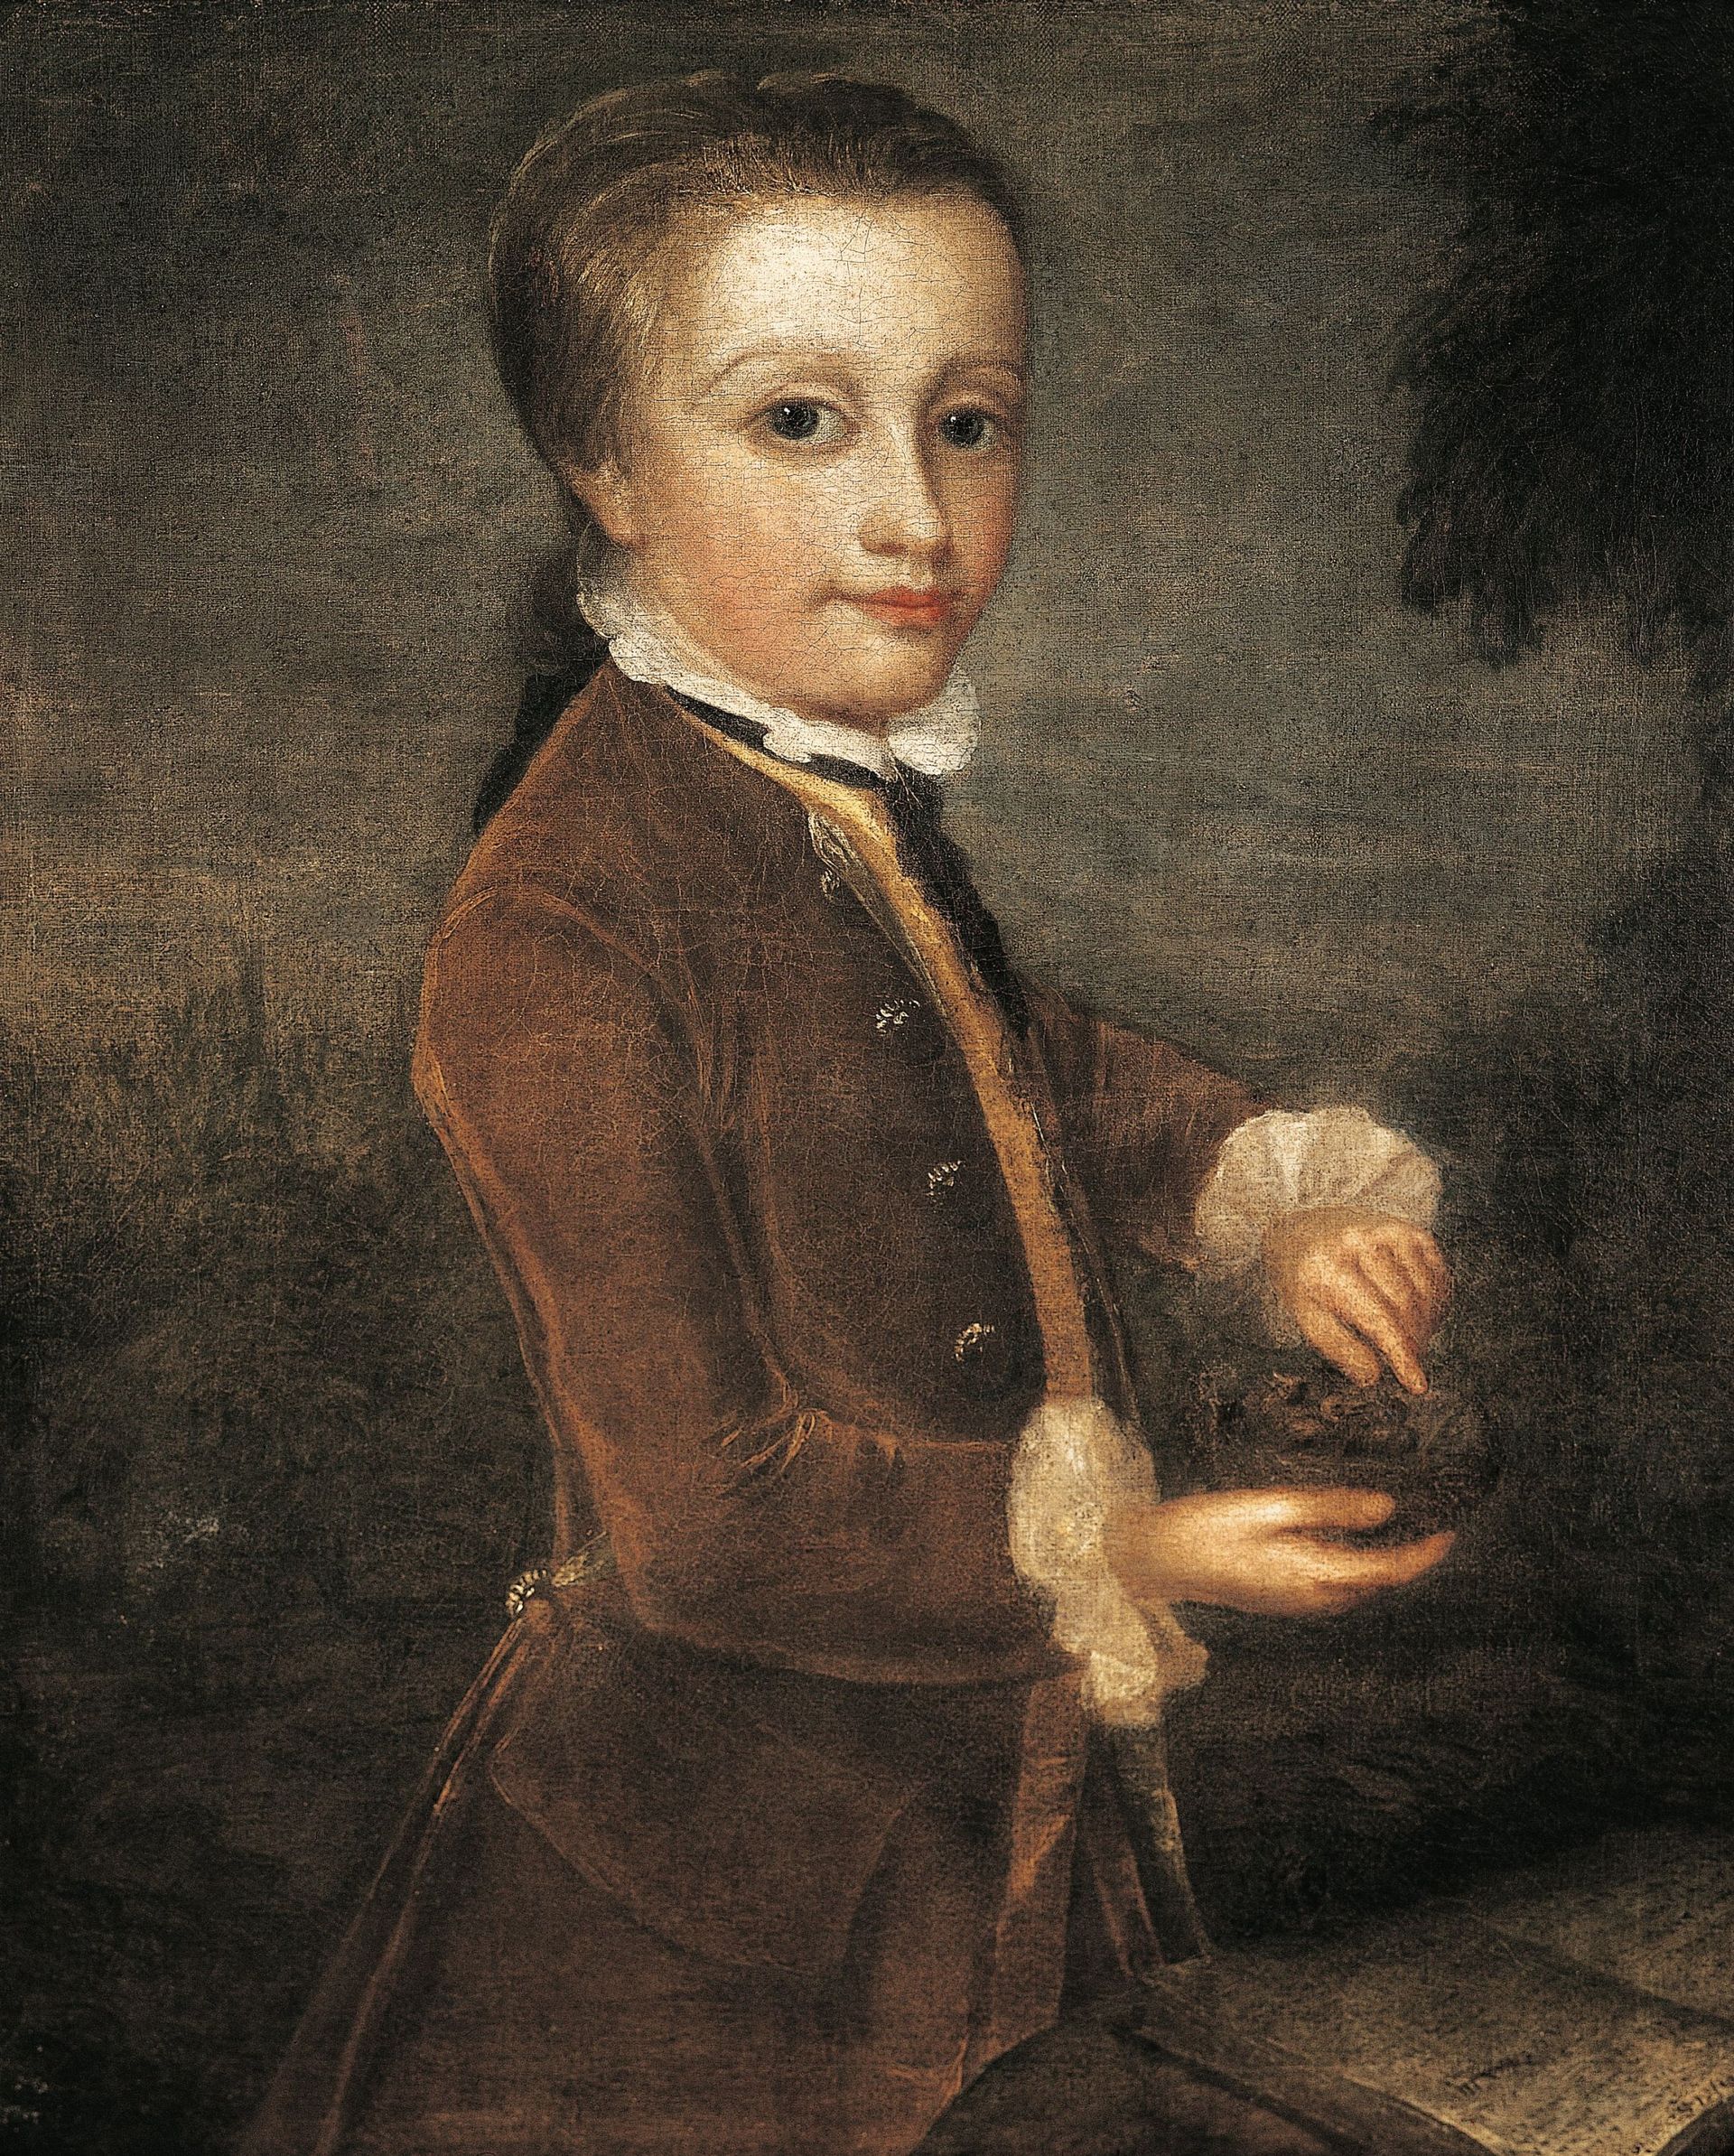  Wolfgang Amadeus Mozart